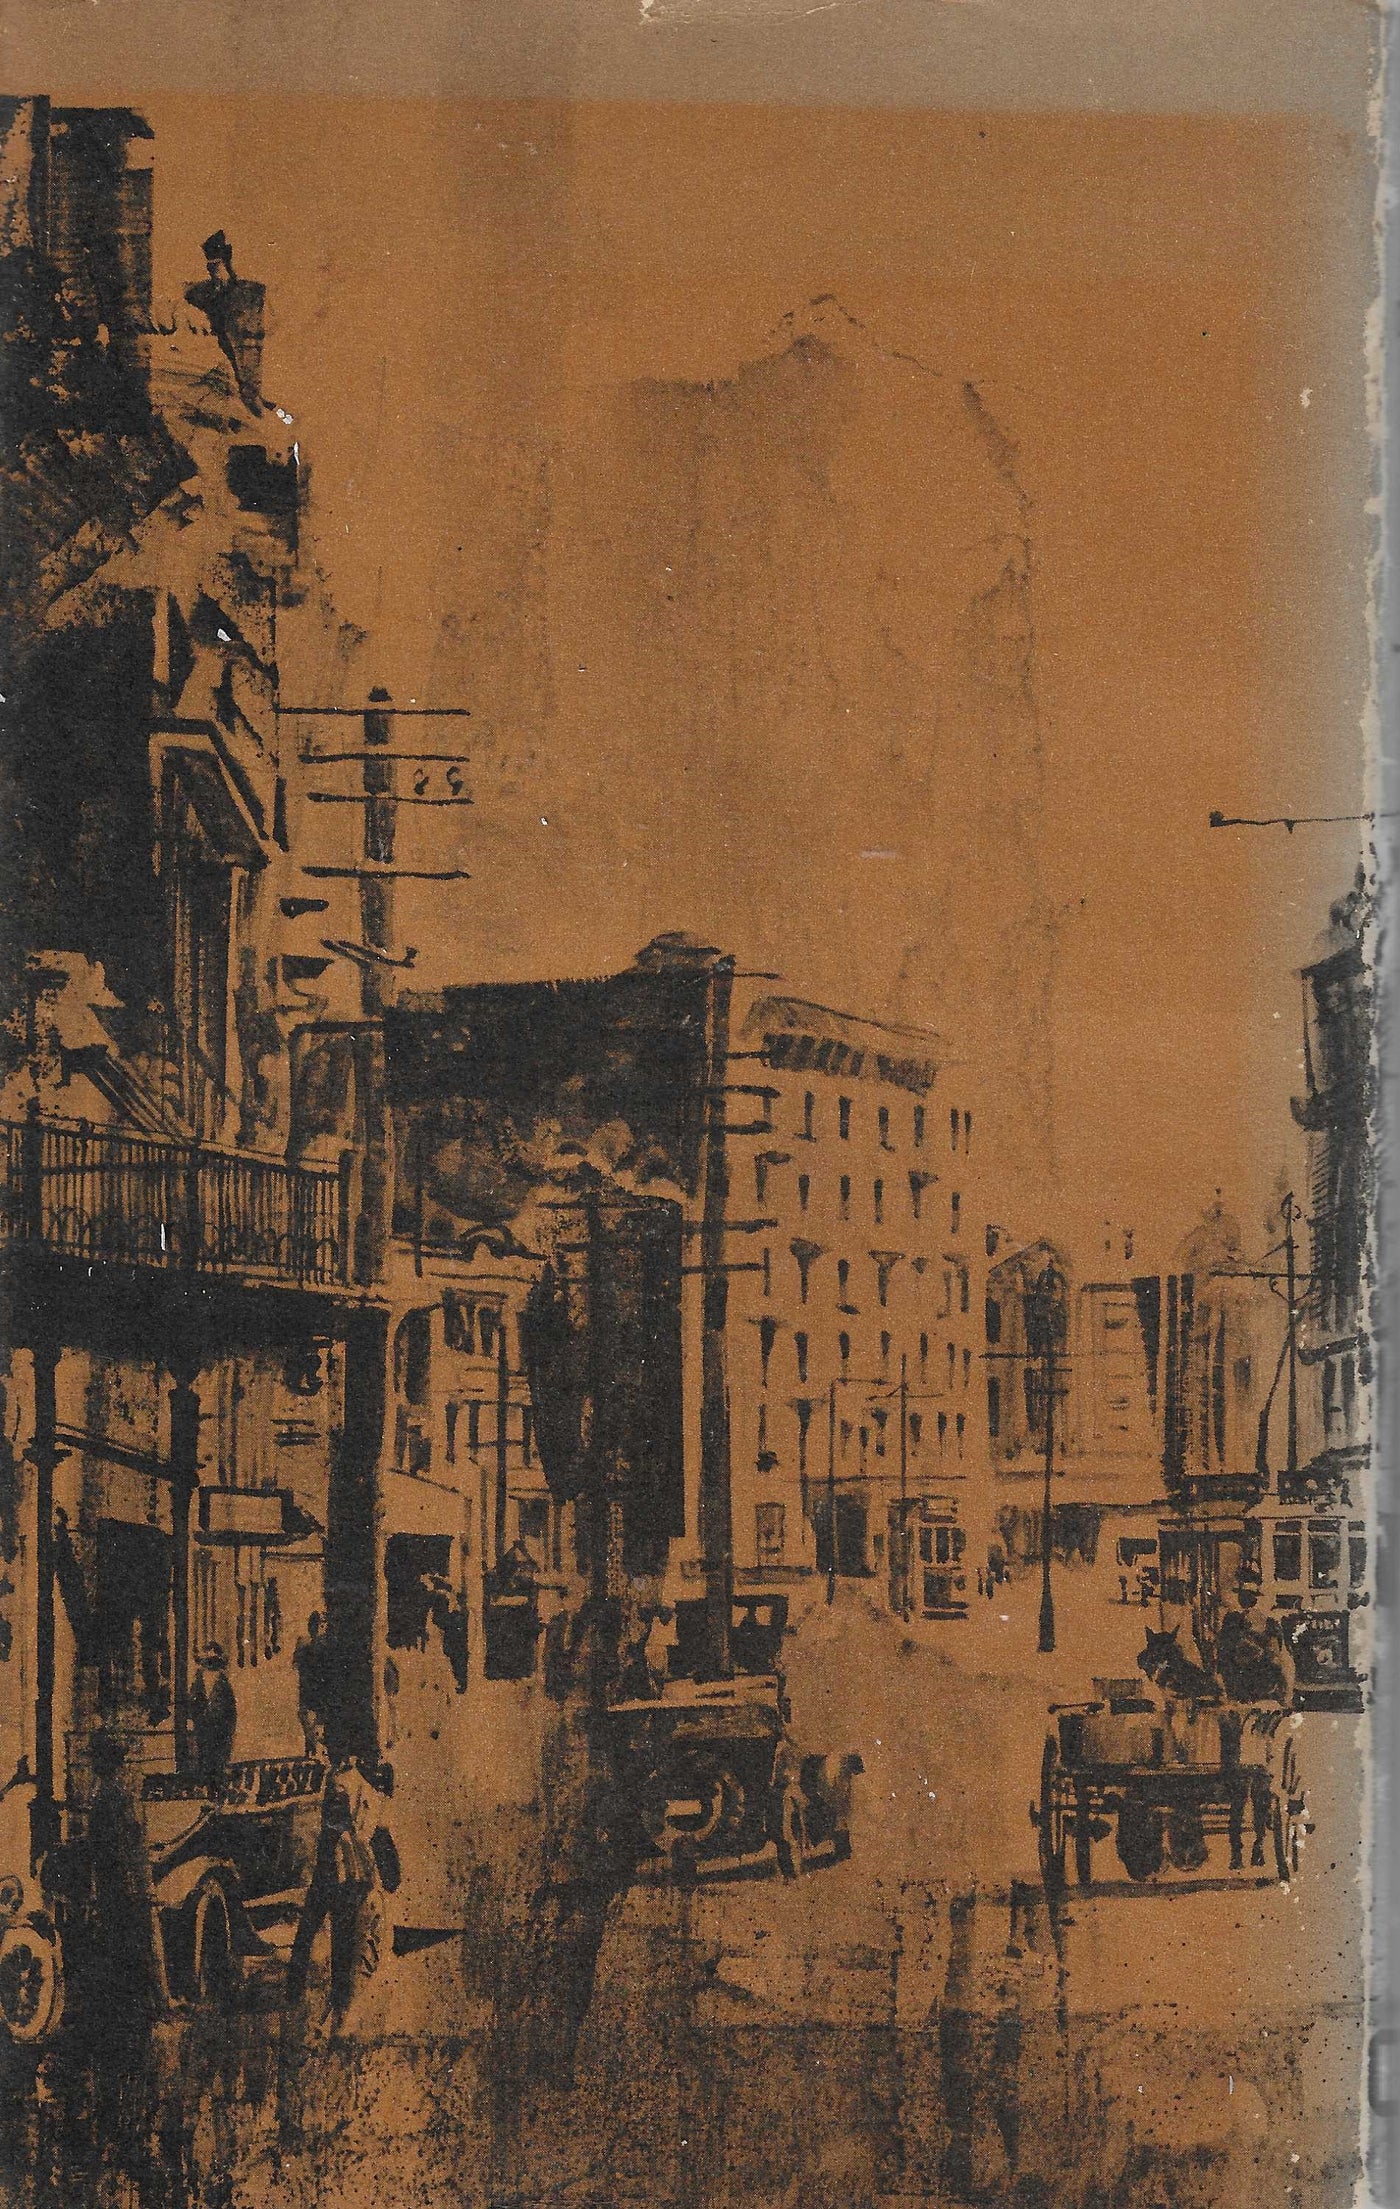 Wellington Prospect: Survey of a City 1840-1970